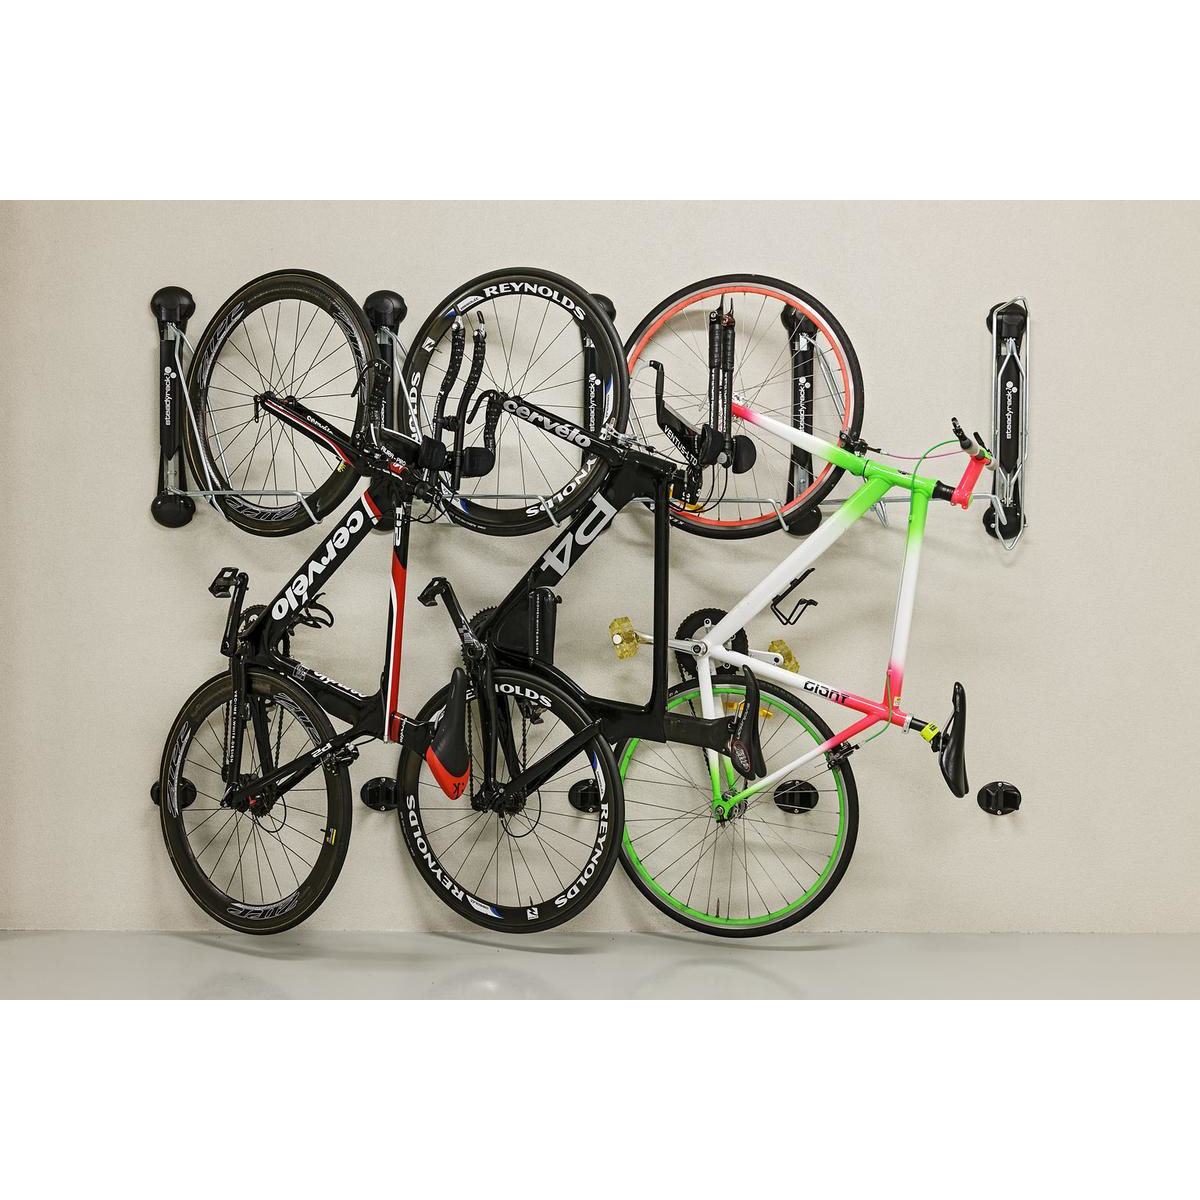 Best ideas about Vertical Bike Storage
. Save or Pin Steadyrack Bike Racks Fender Rack Vertical Bike Storage Now.